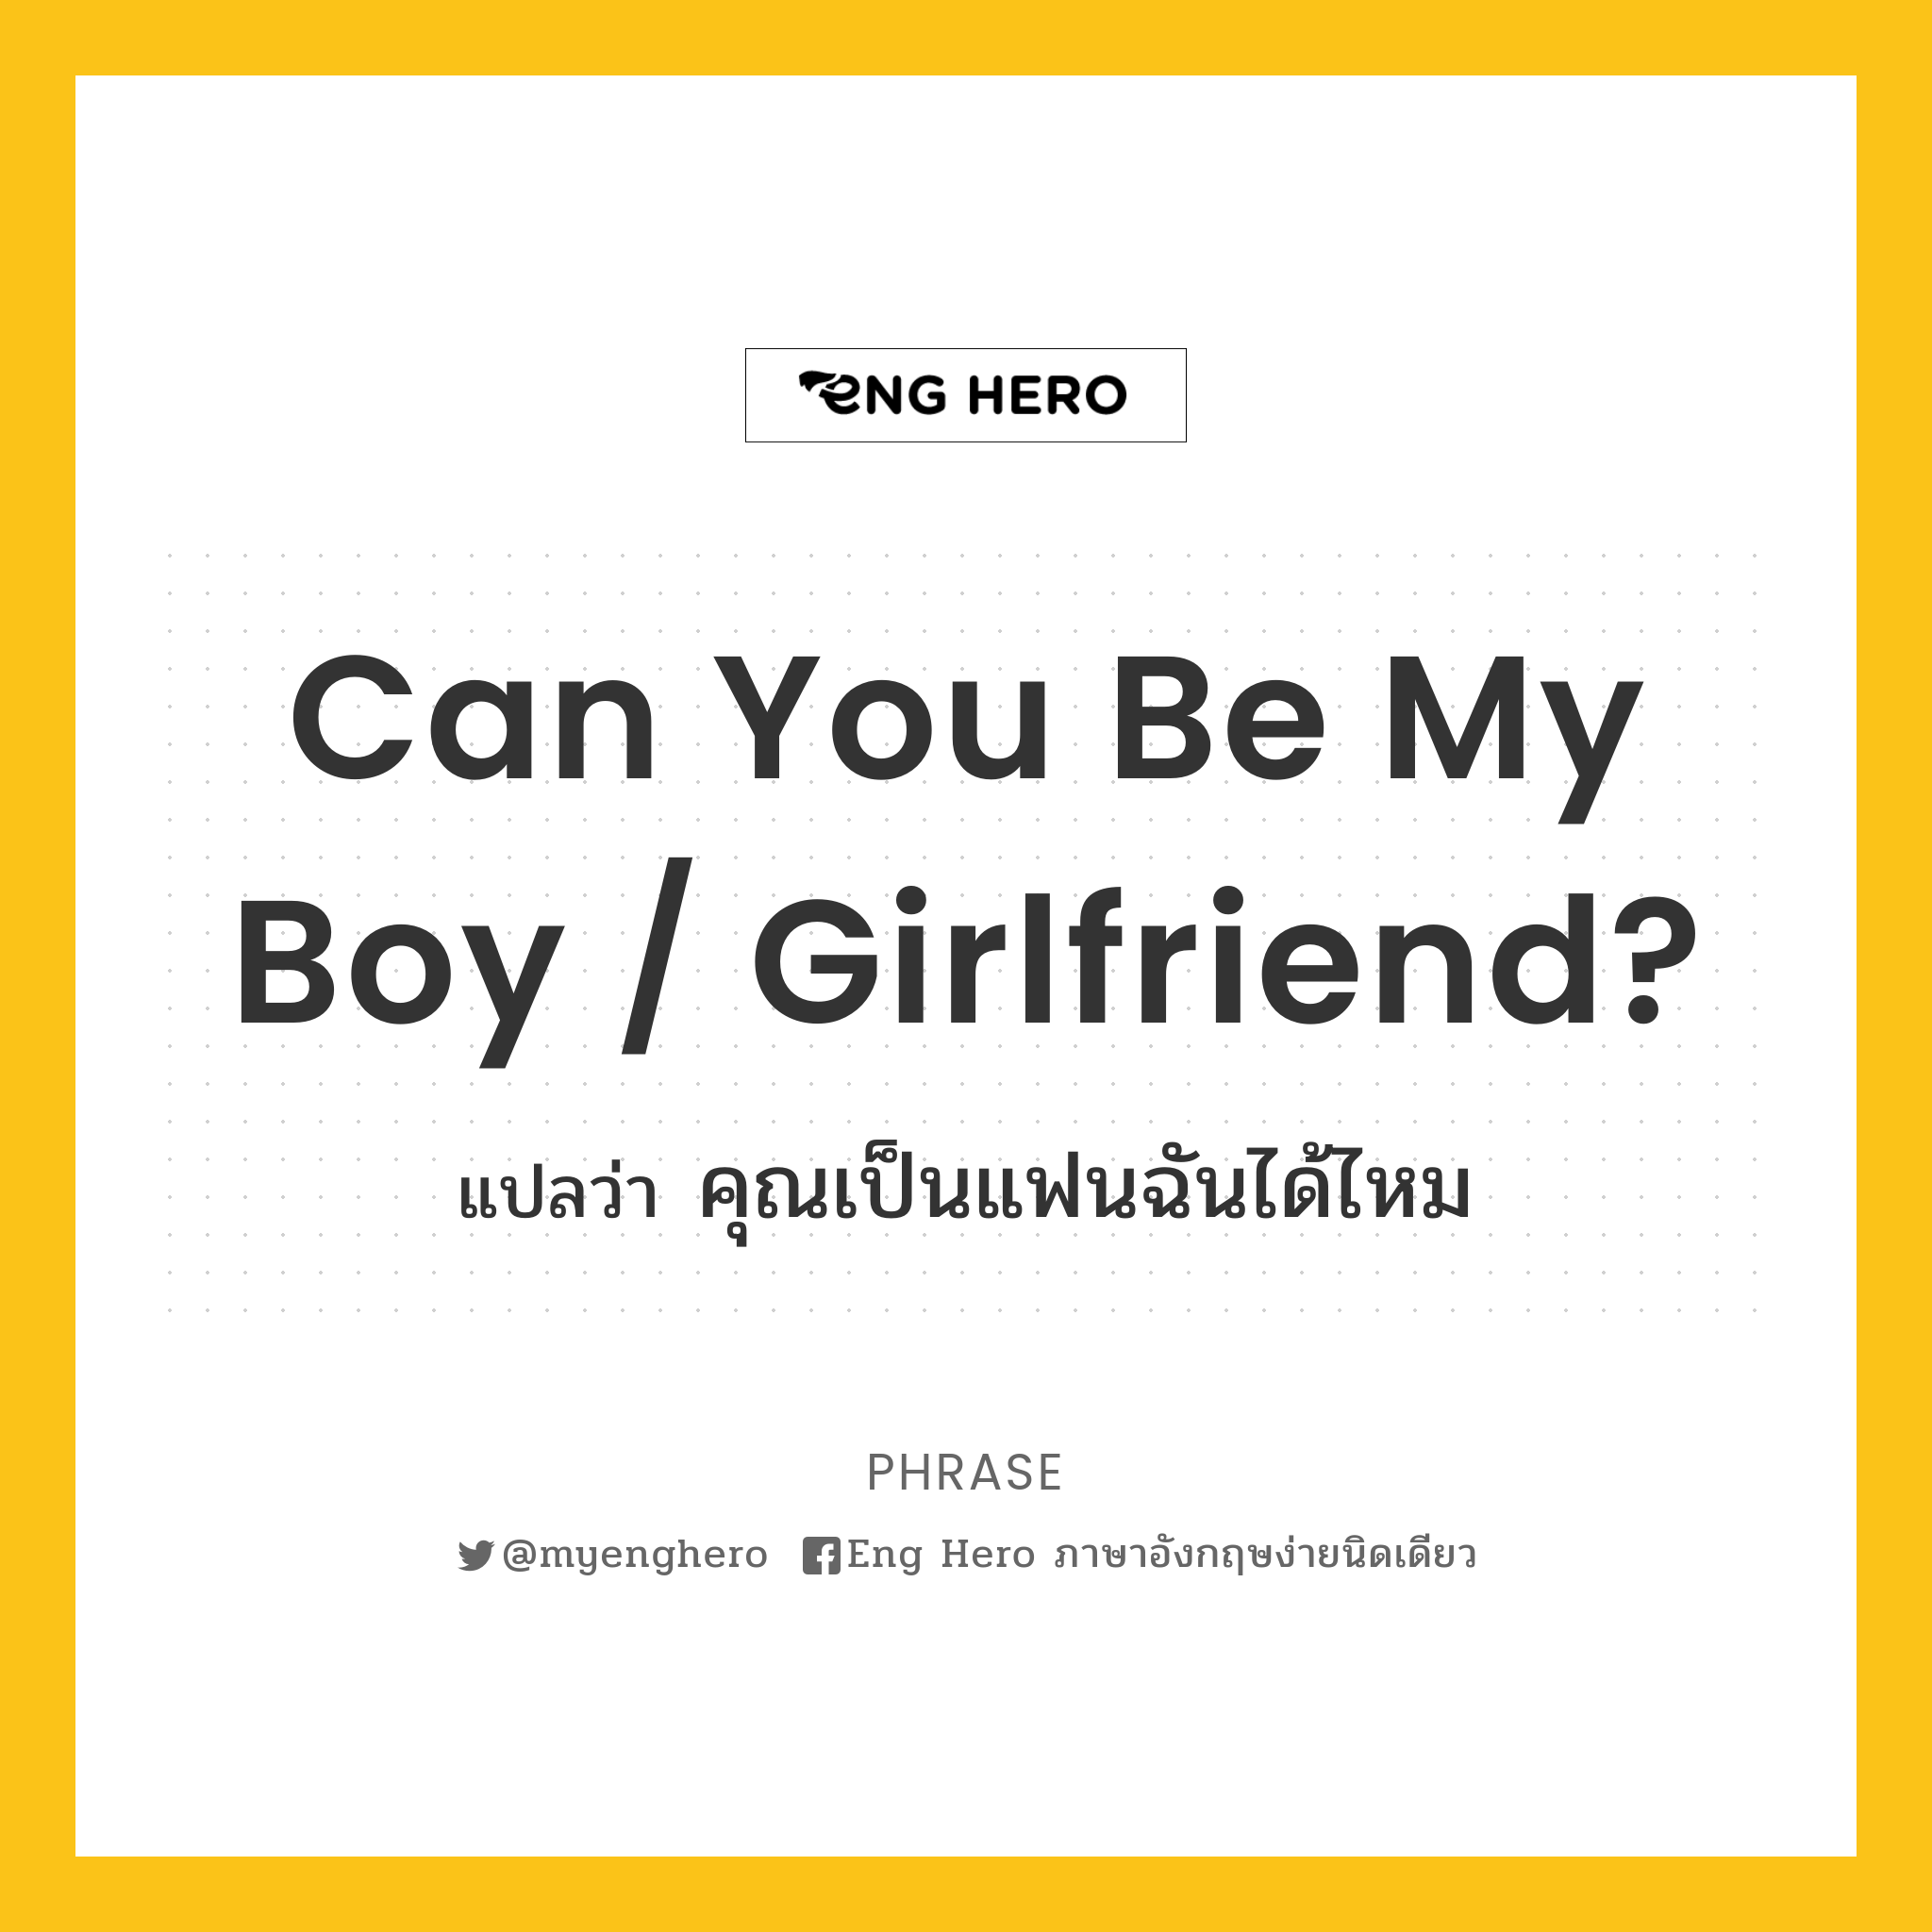 Can you be my boy / girlfriend?